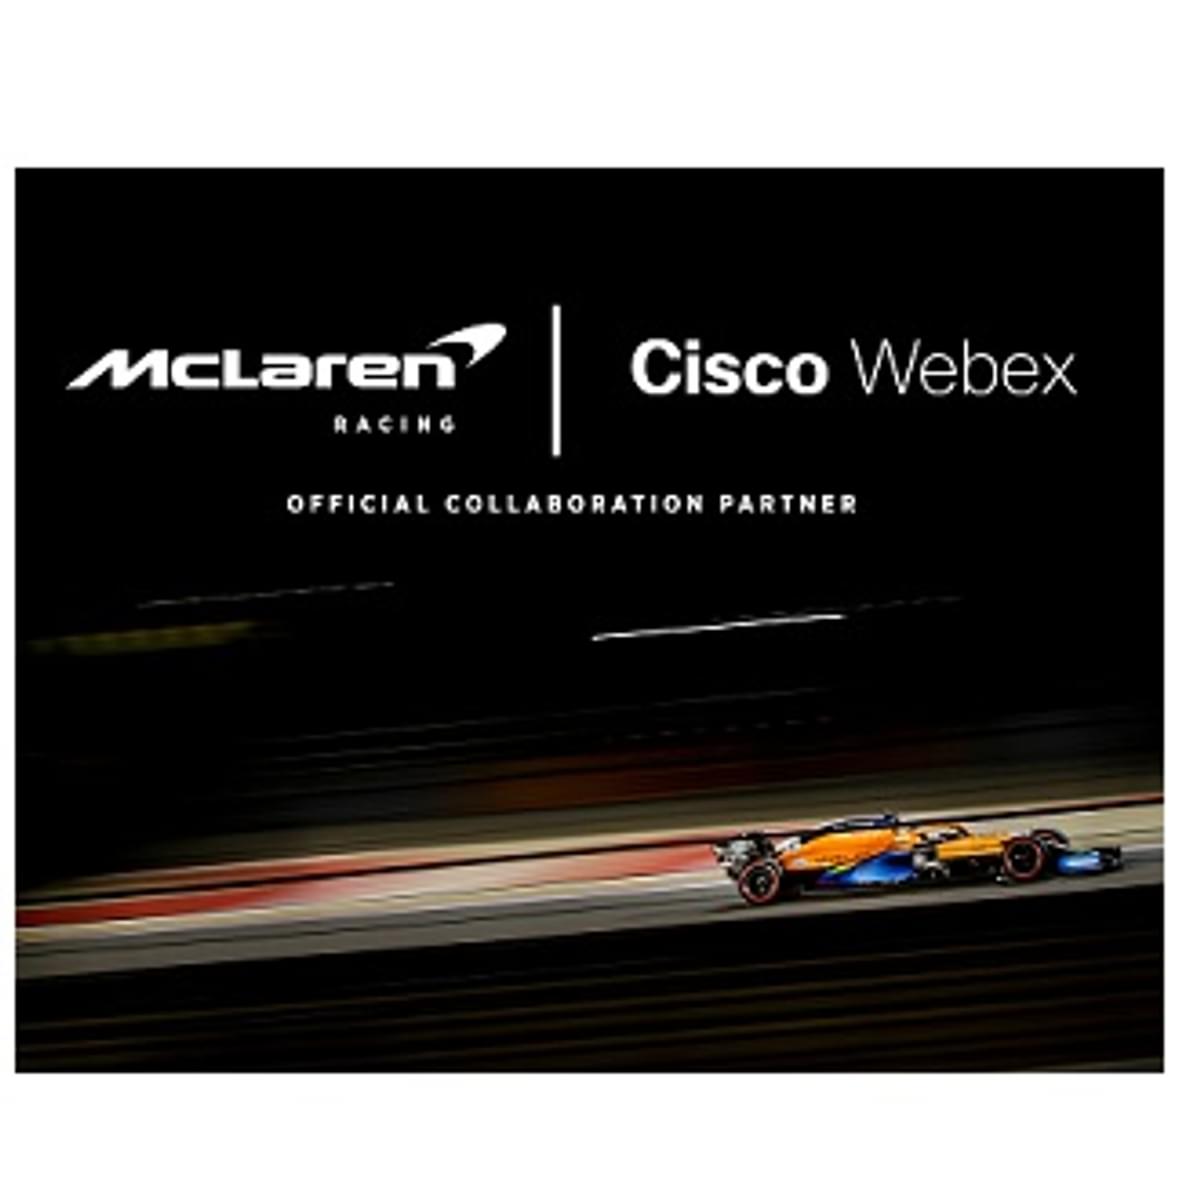 Cisco Webex is Official Collaboration Partner McLaren Formula 1 team image